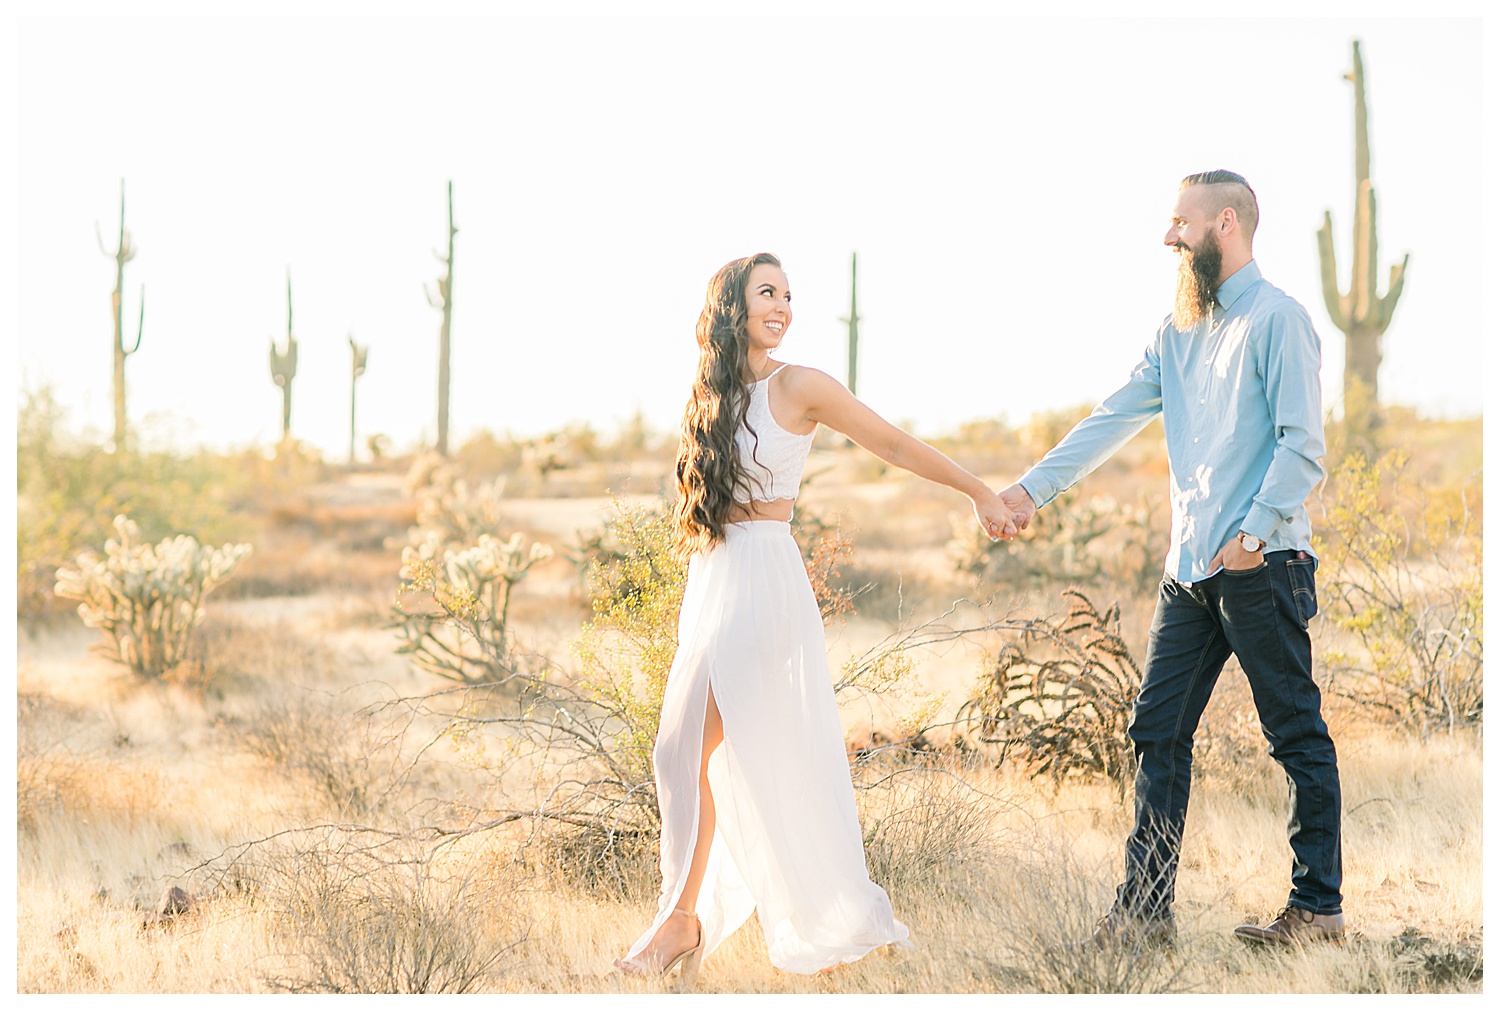 Desert Engagement Session, Phoenix Wedding Photographer, Engagement Session Outfits, White Dress, Jeans, Button Up Shirt Cactus, Saguaro Cactus